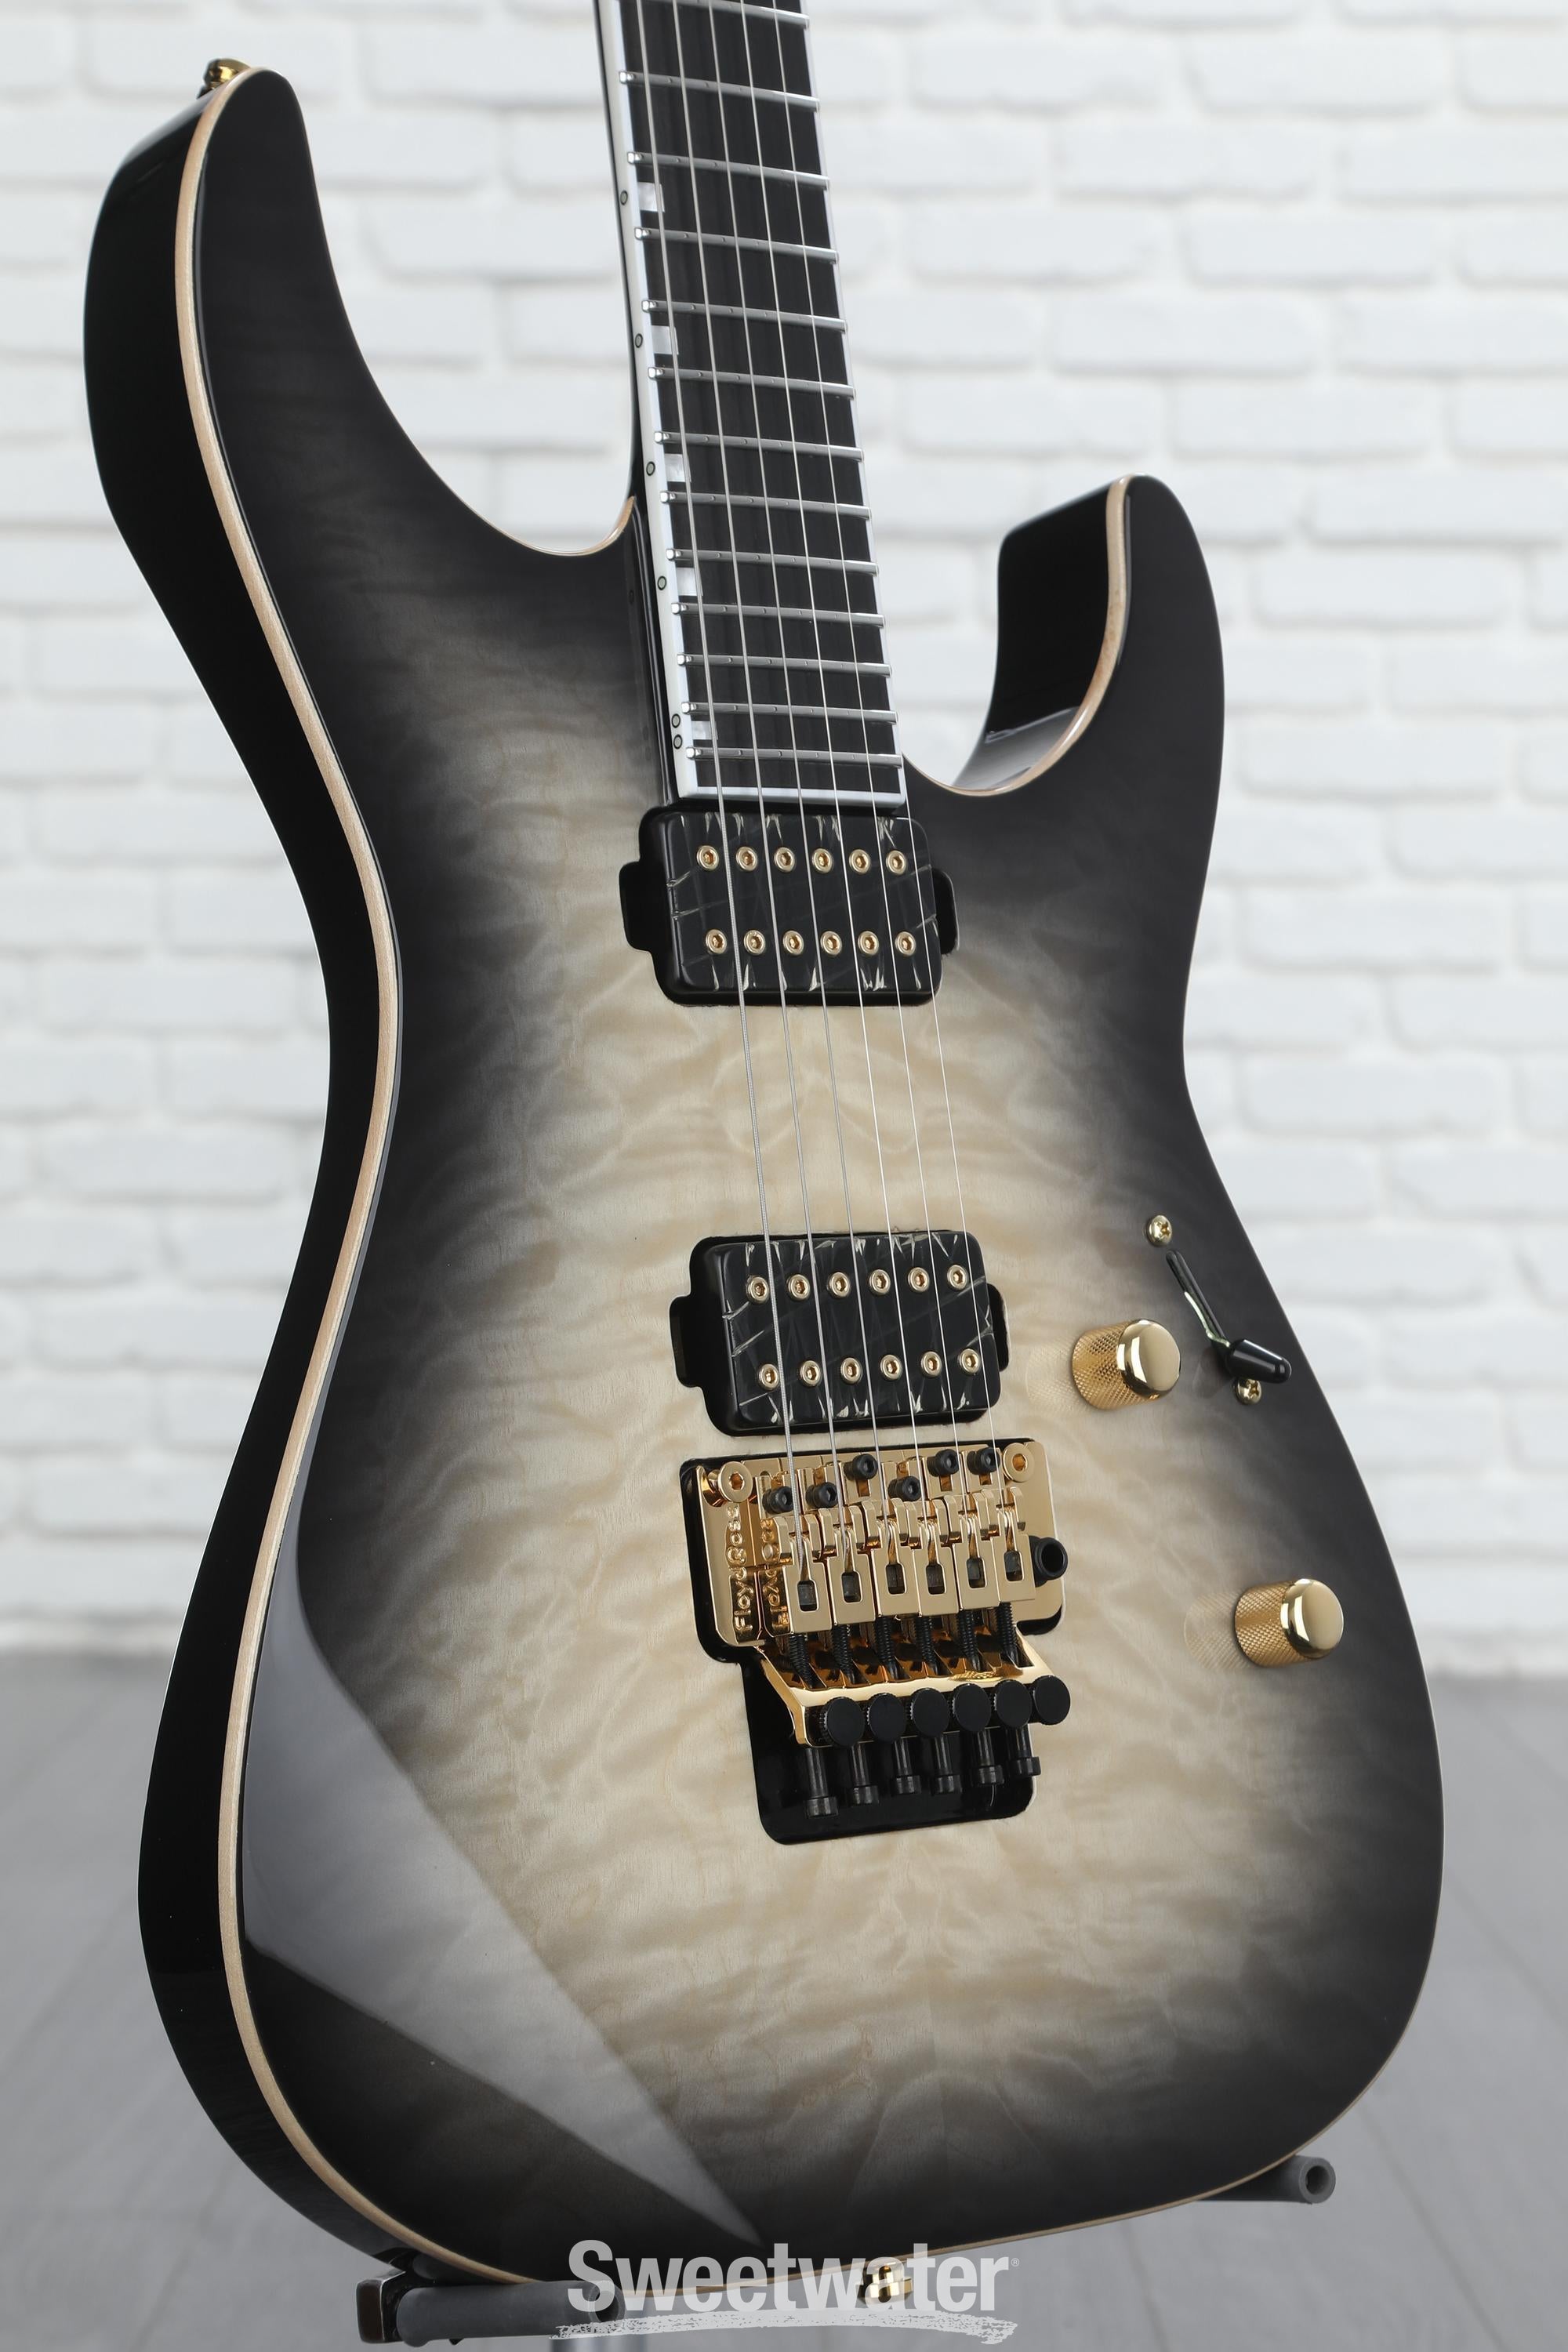 ESP E-II M-II QM Electric Guitar - Black Natural Burst